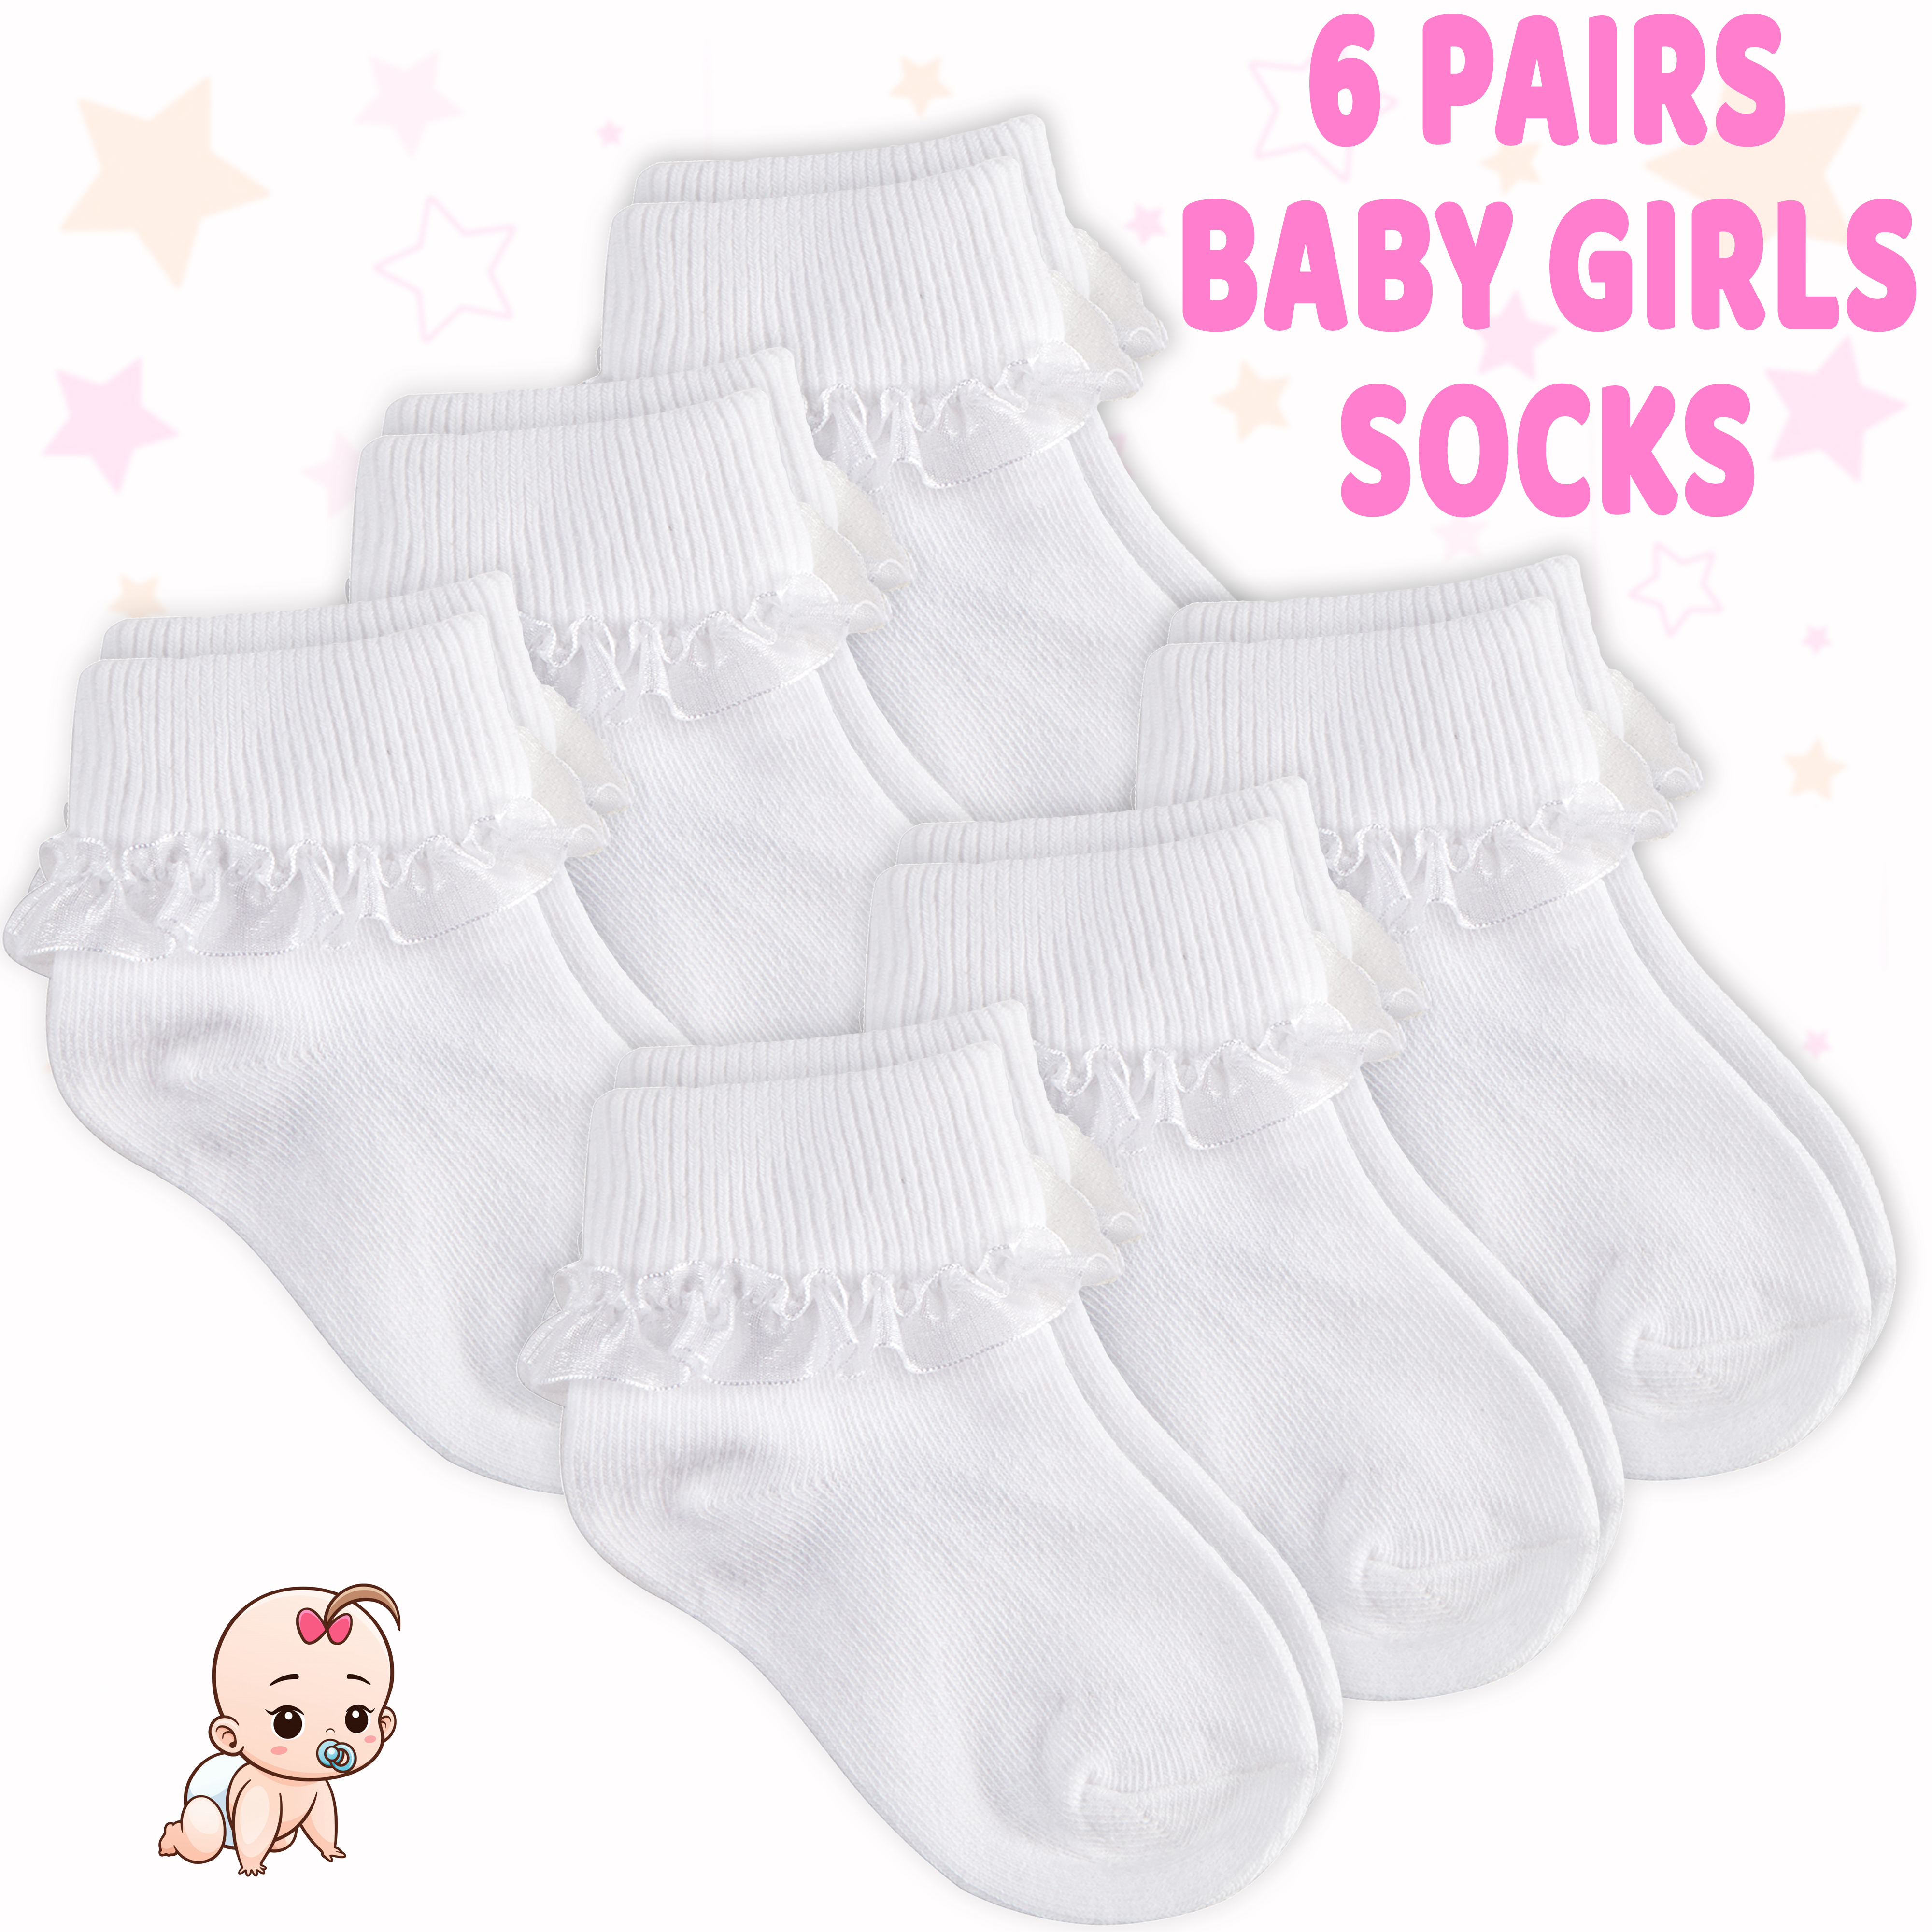 5Pairs Newborn Baby Girls Frilly Lace Tutu Socks Infant Toddler Ankle Socks